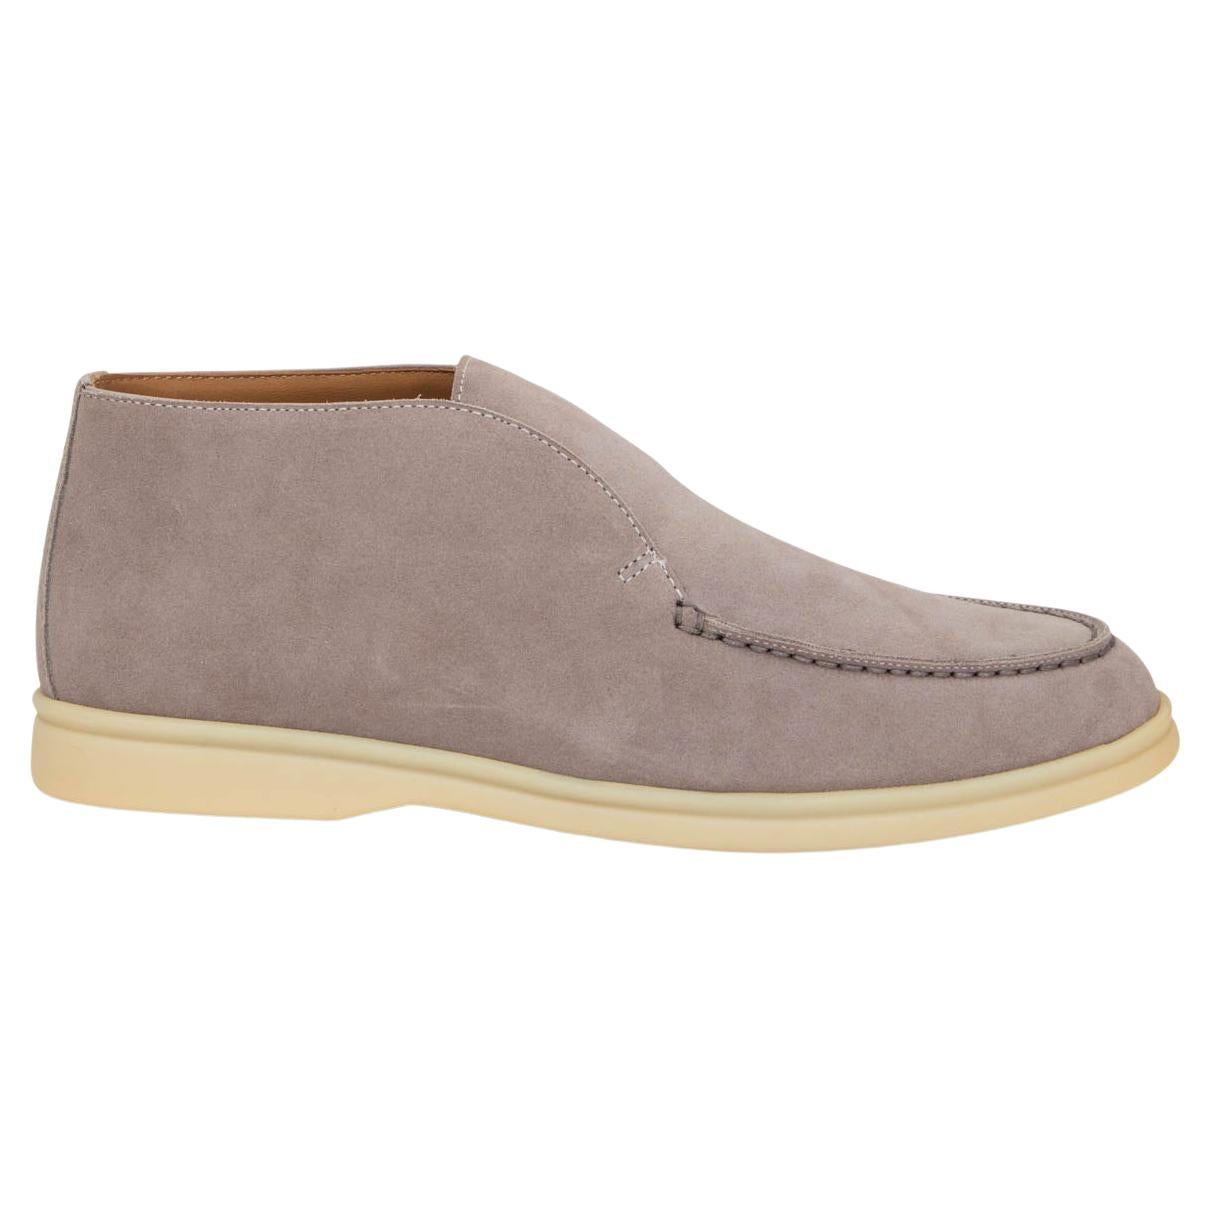 LORO PIANA pearl grey suede OPEN WALK Loafers Shoes 37